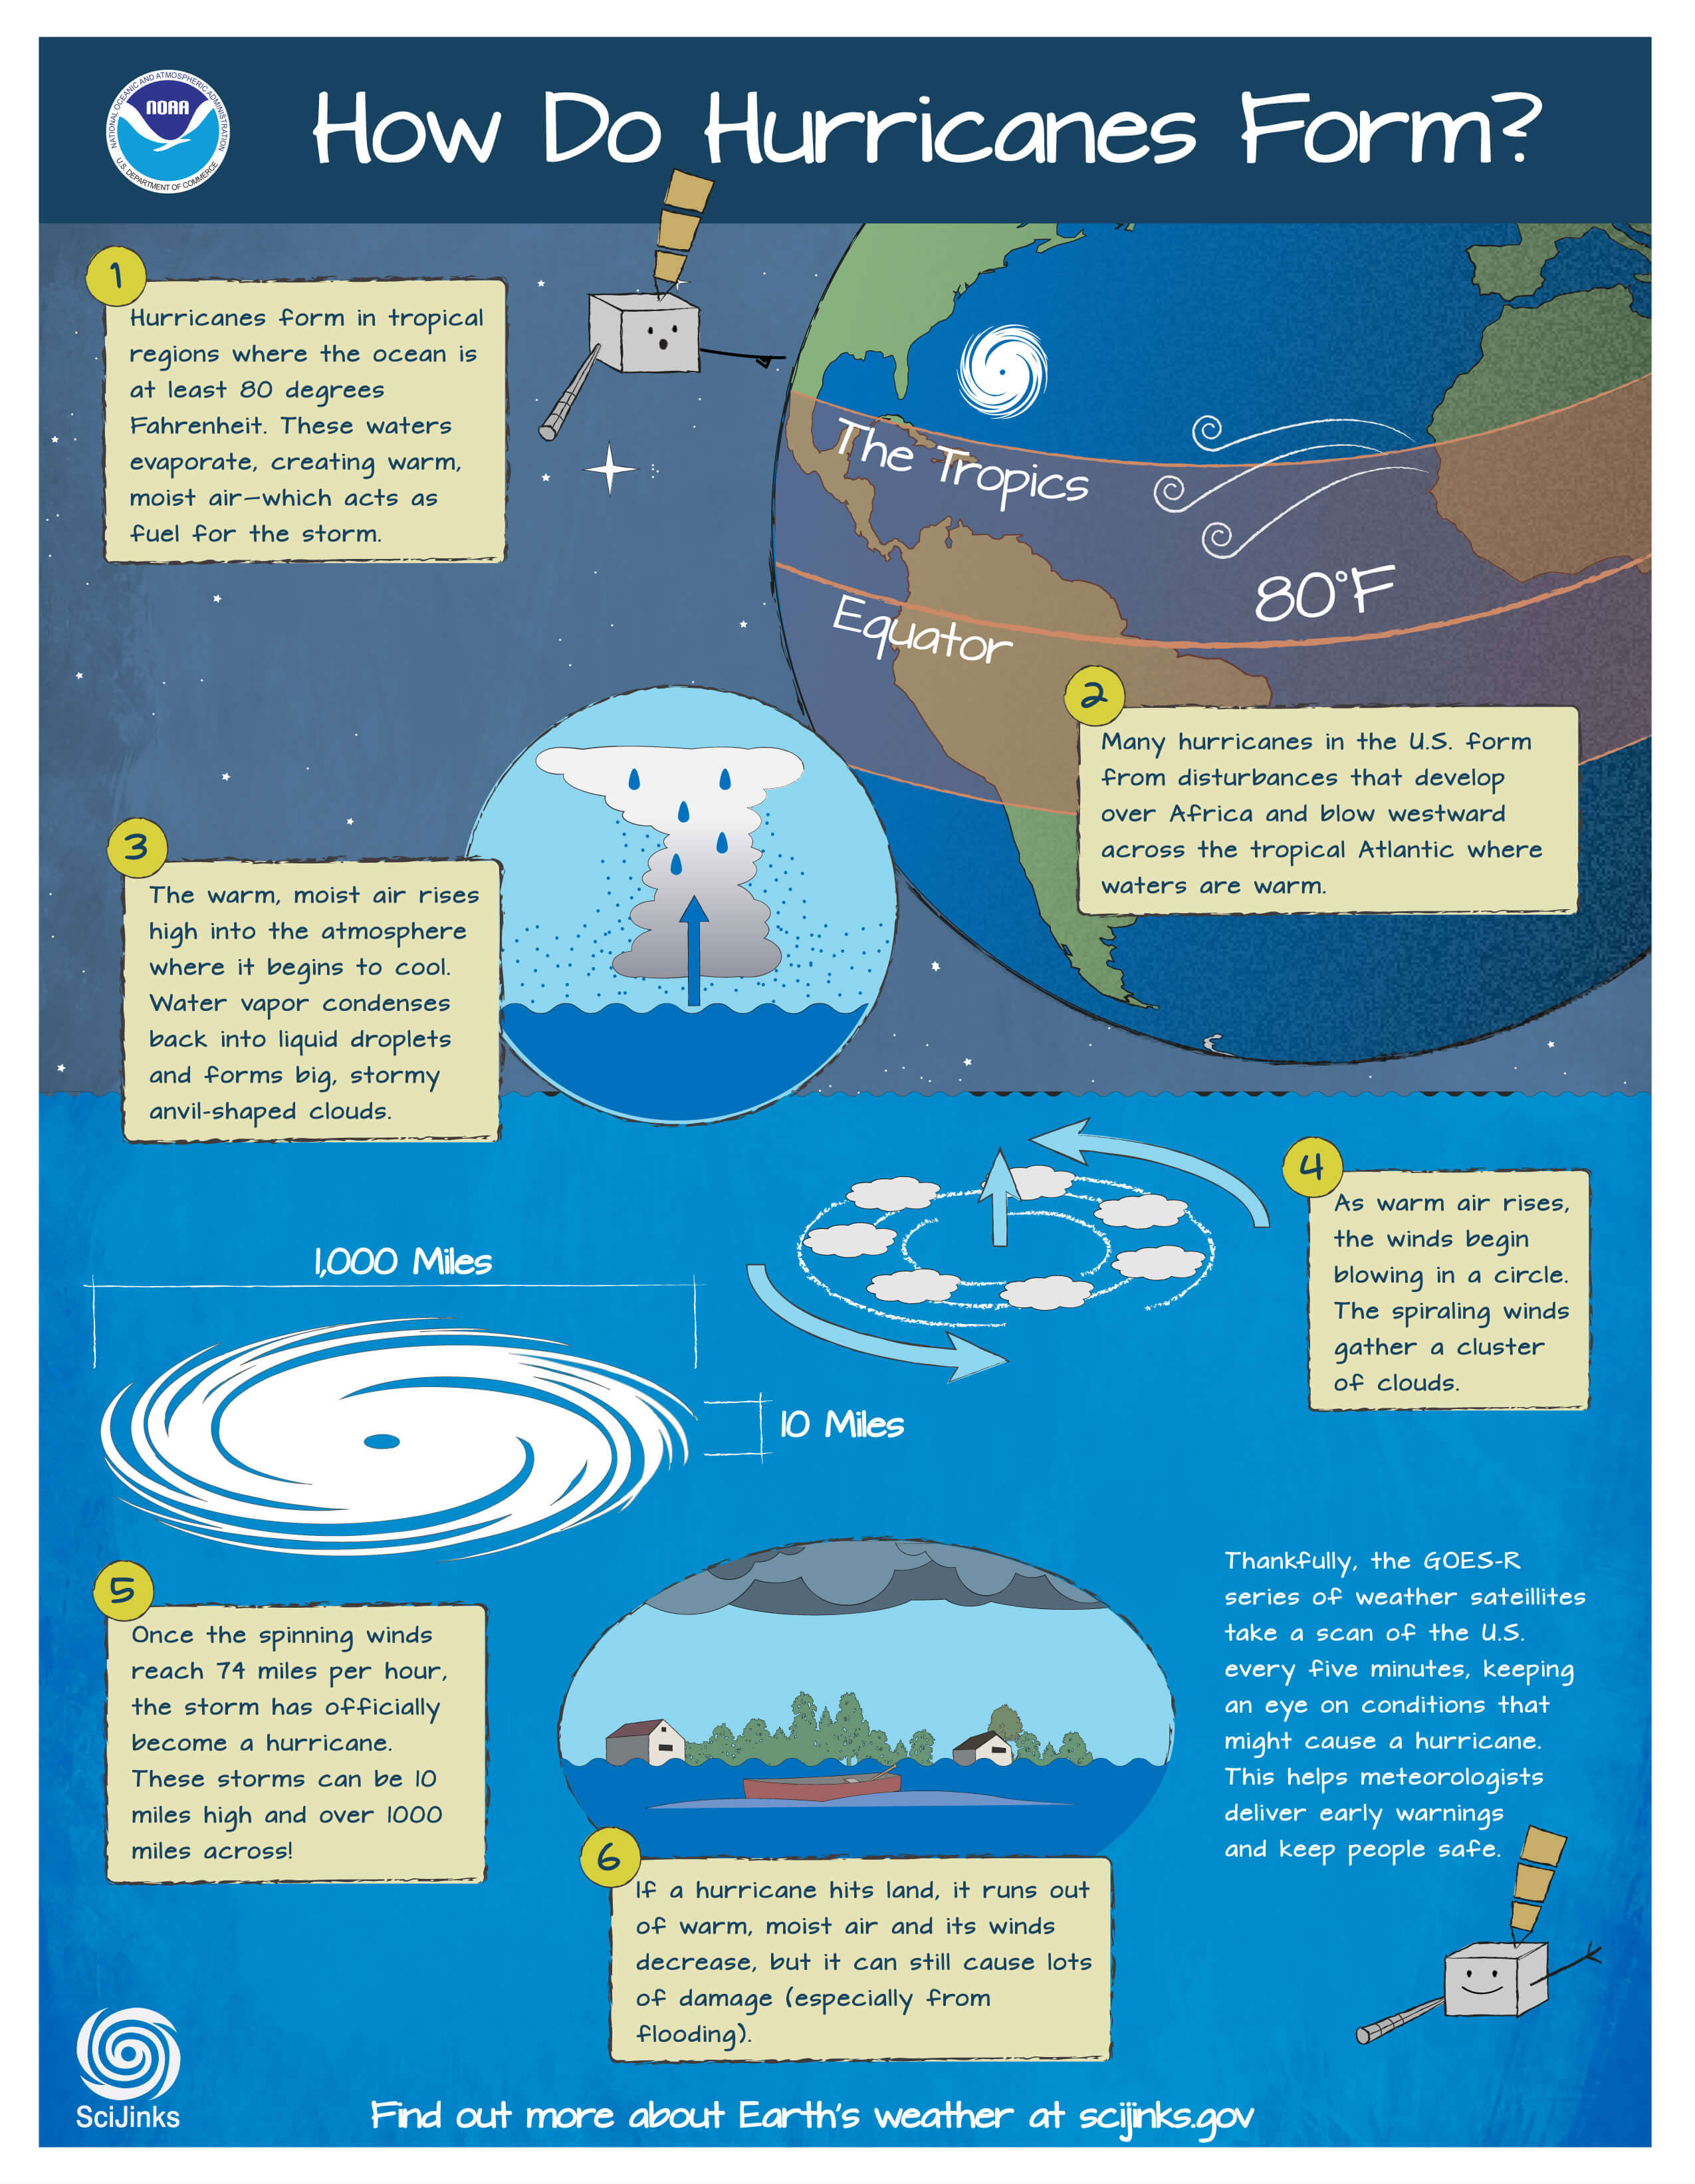 How do hurricanes form? (source: SciJinks)